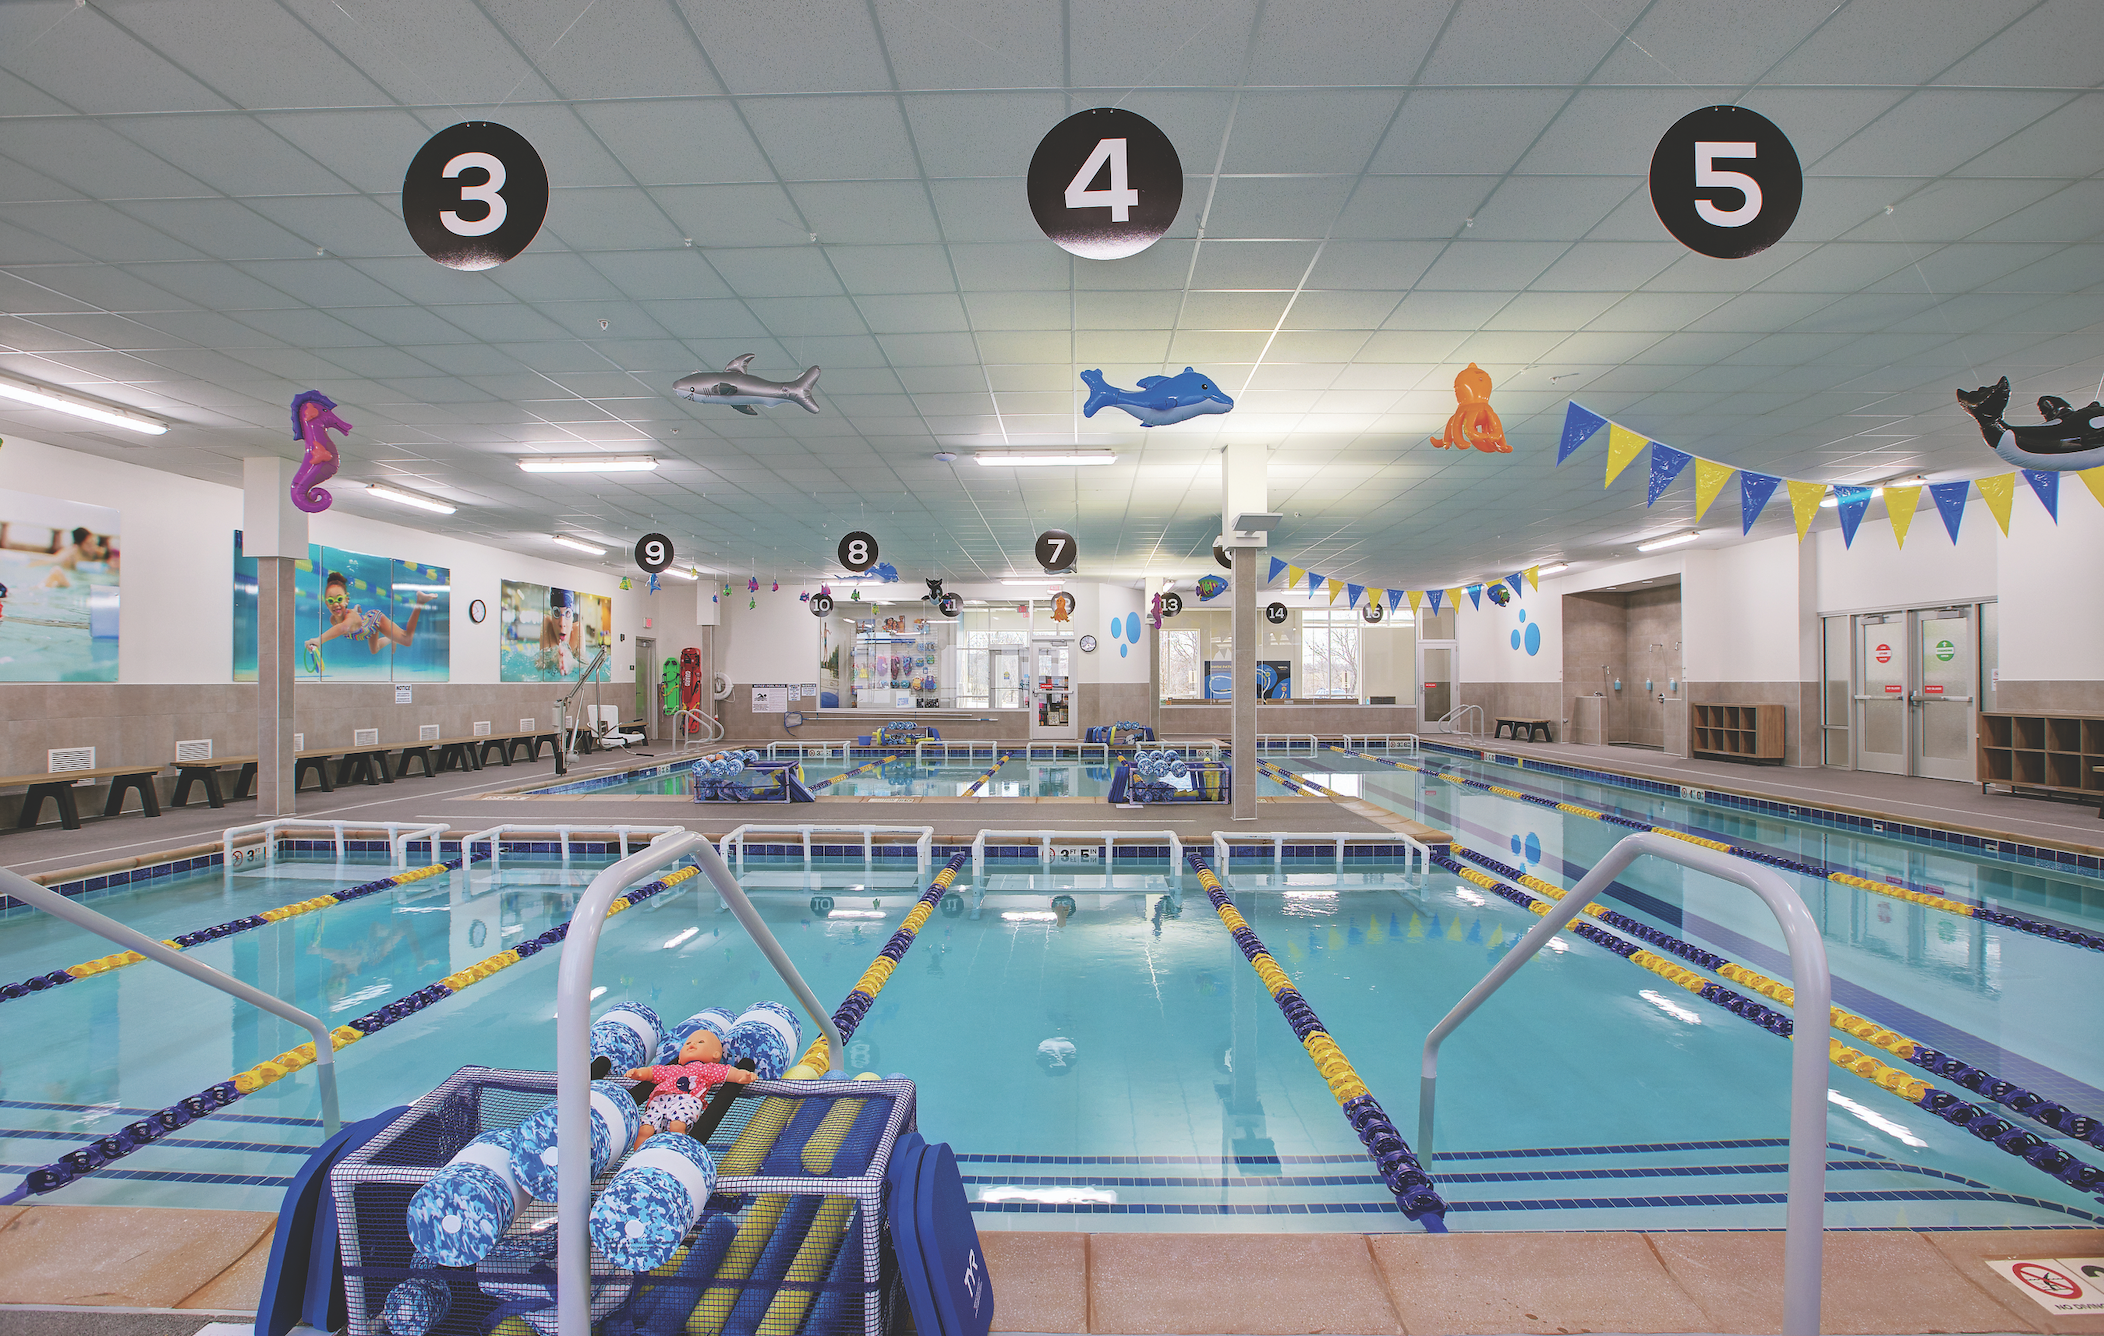 How deep should water be to learn to swim? - Foss Swim School